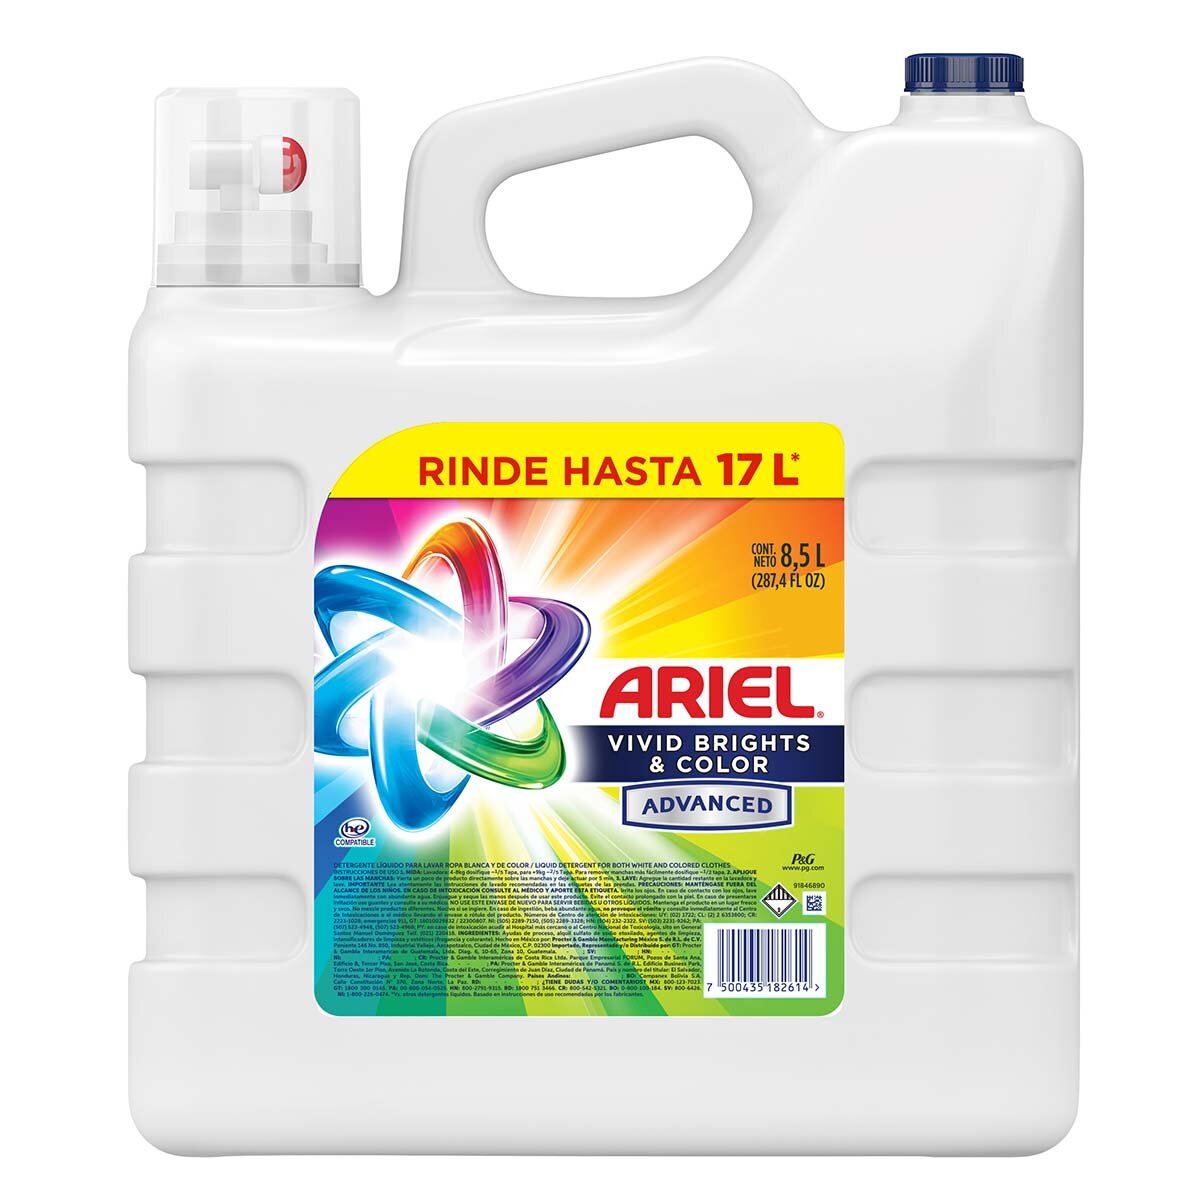 Ariel Color+ Extra Fiber Care - Detergente líquido para ropa (33.5 fl oz)  (18 cargas de lavado)